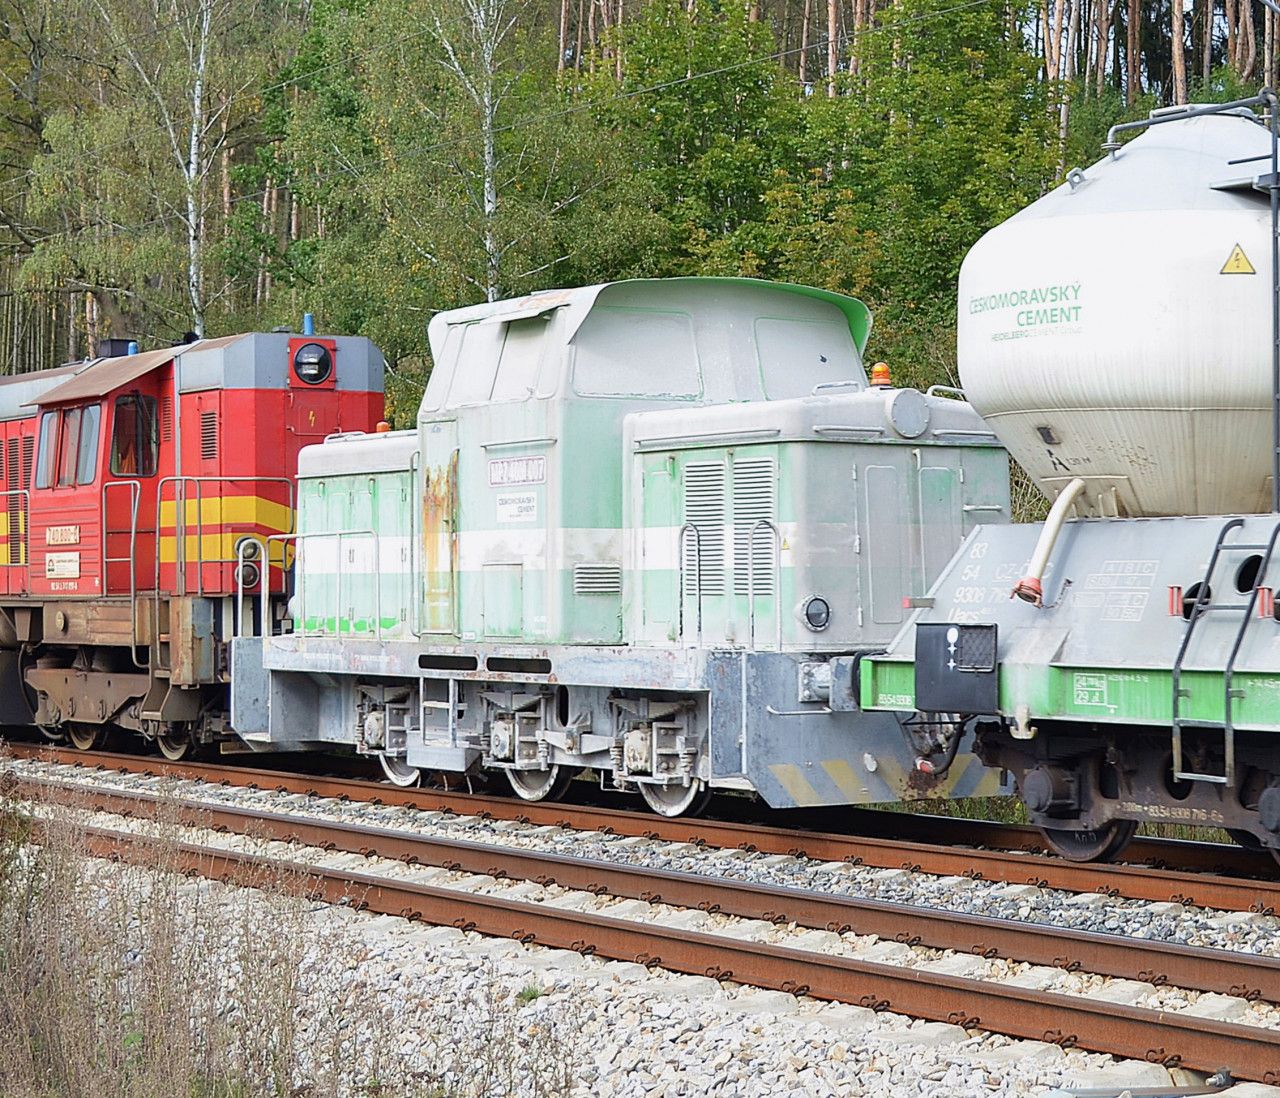 740.800 LokoTrans Brno + MPZ 40M 007 CeskoMoravsky Cement_Havlickuv Brod - Okrouhlice_16.9.2019 (2)